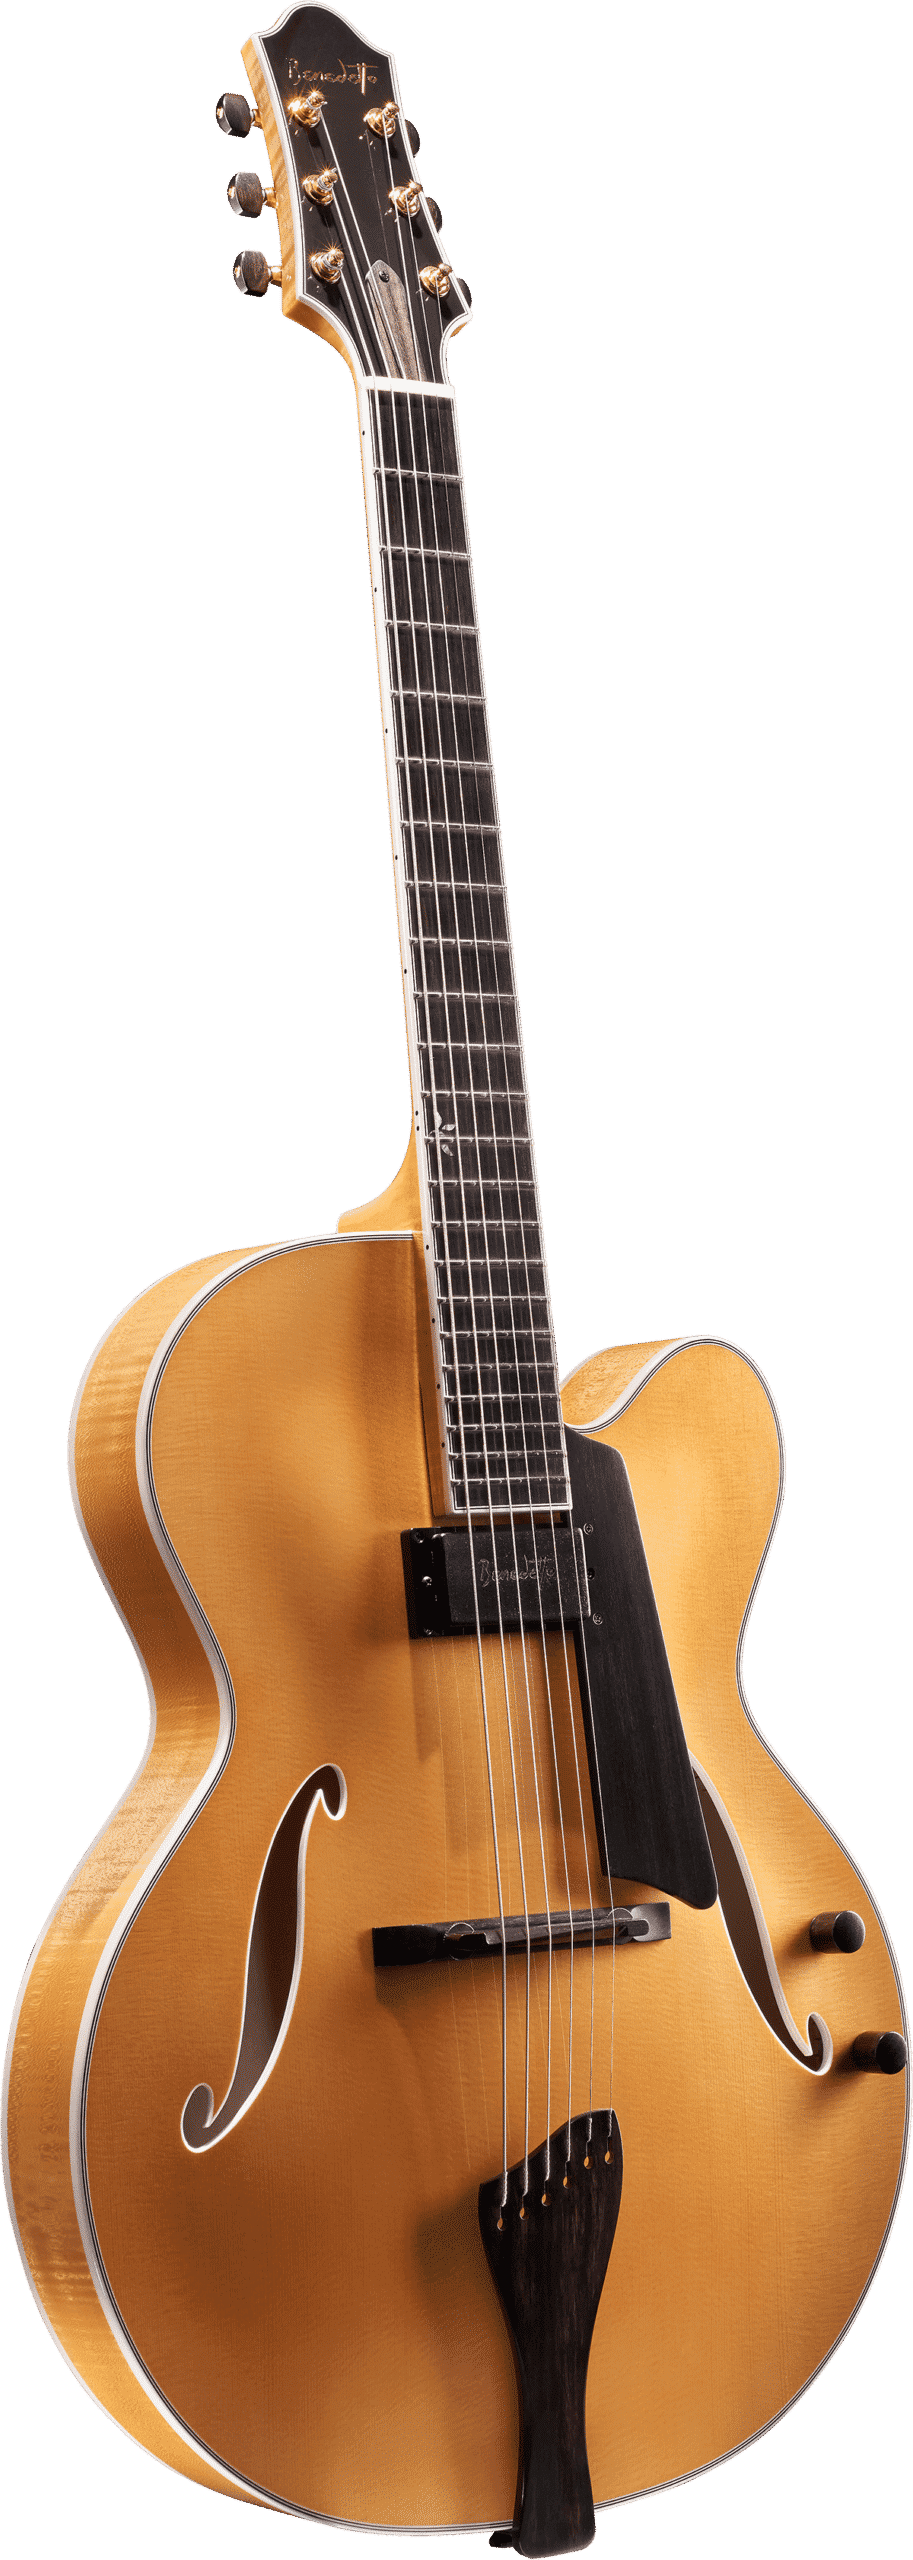 Bravo Deluxe Guitar Model